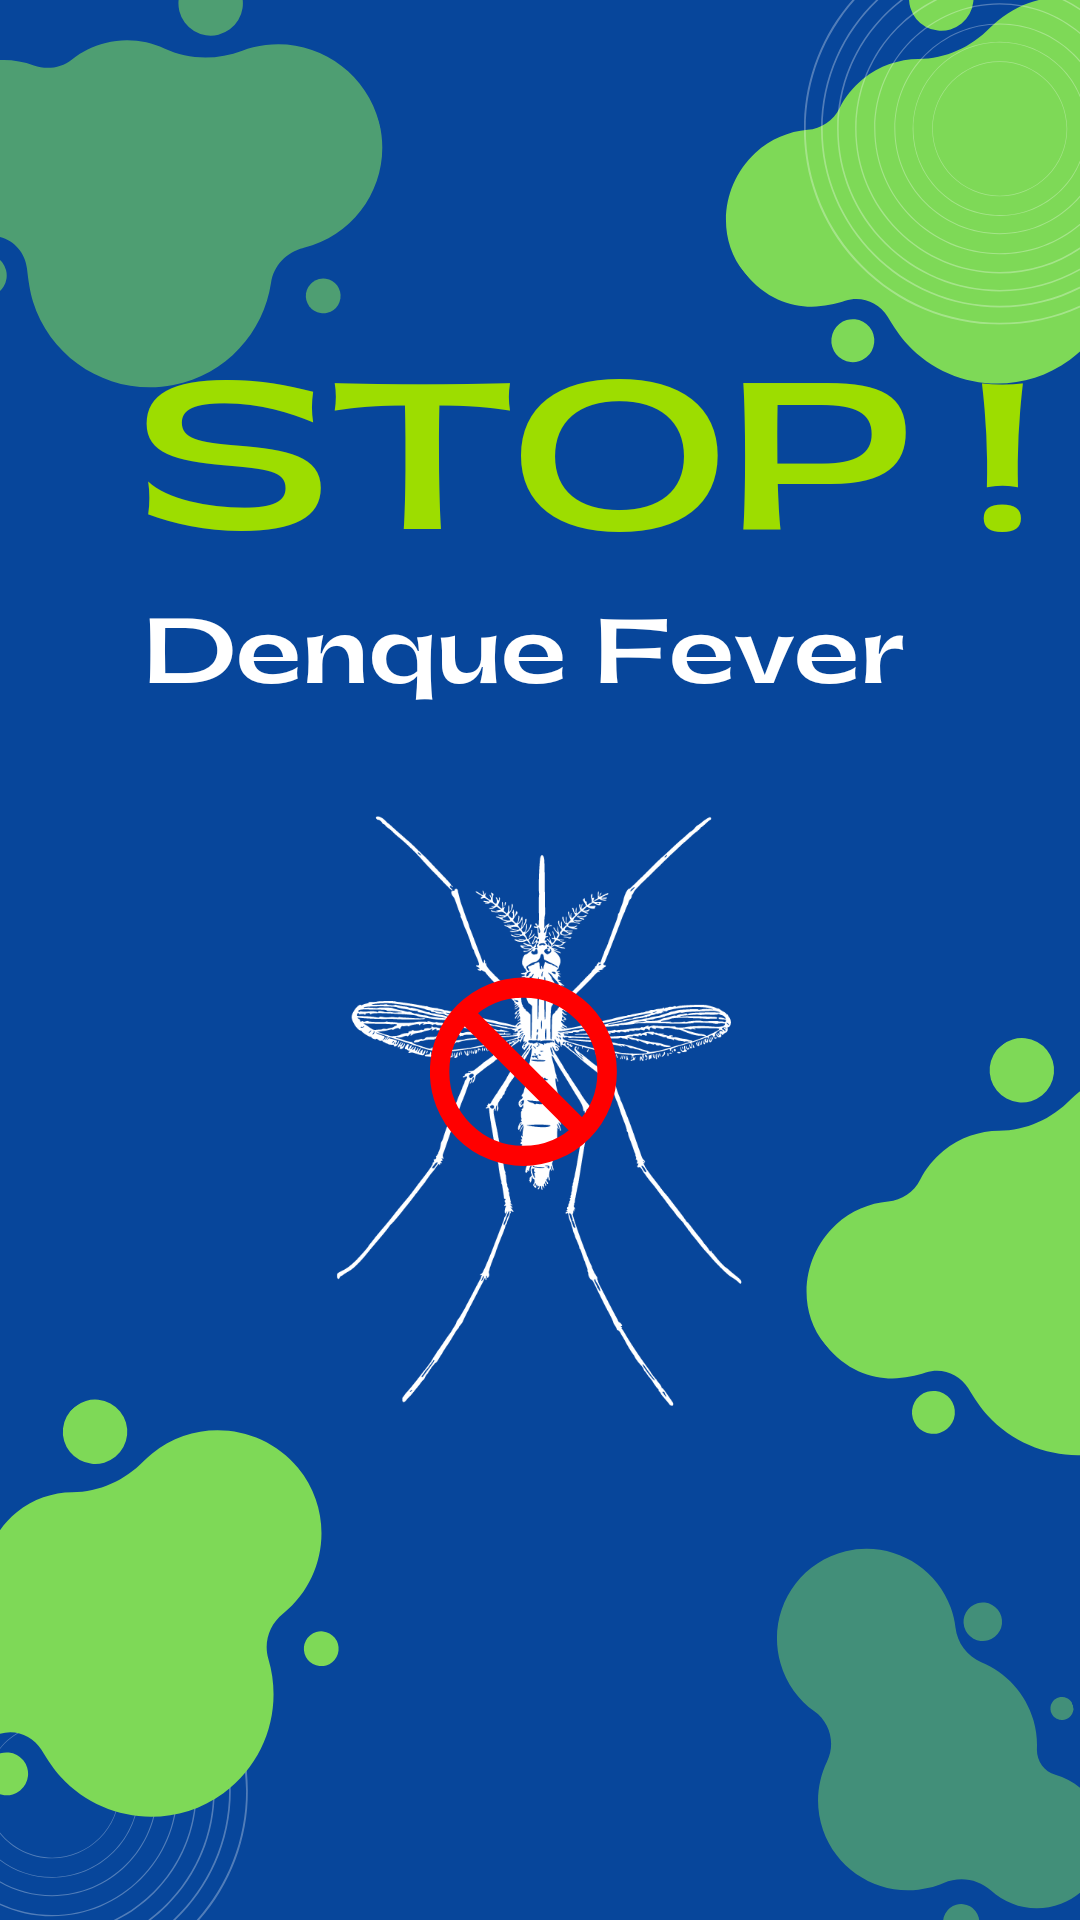 Dengue fever ,symptoms ,treatment,medication,causes